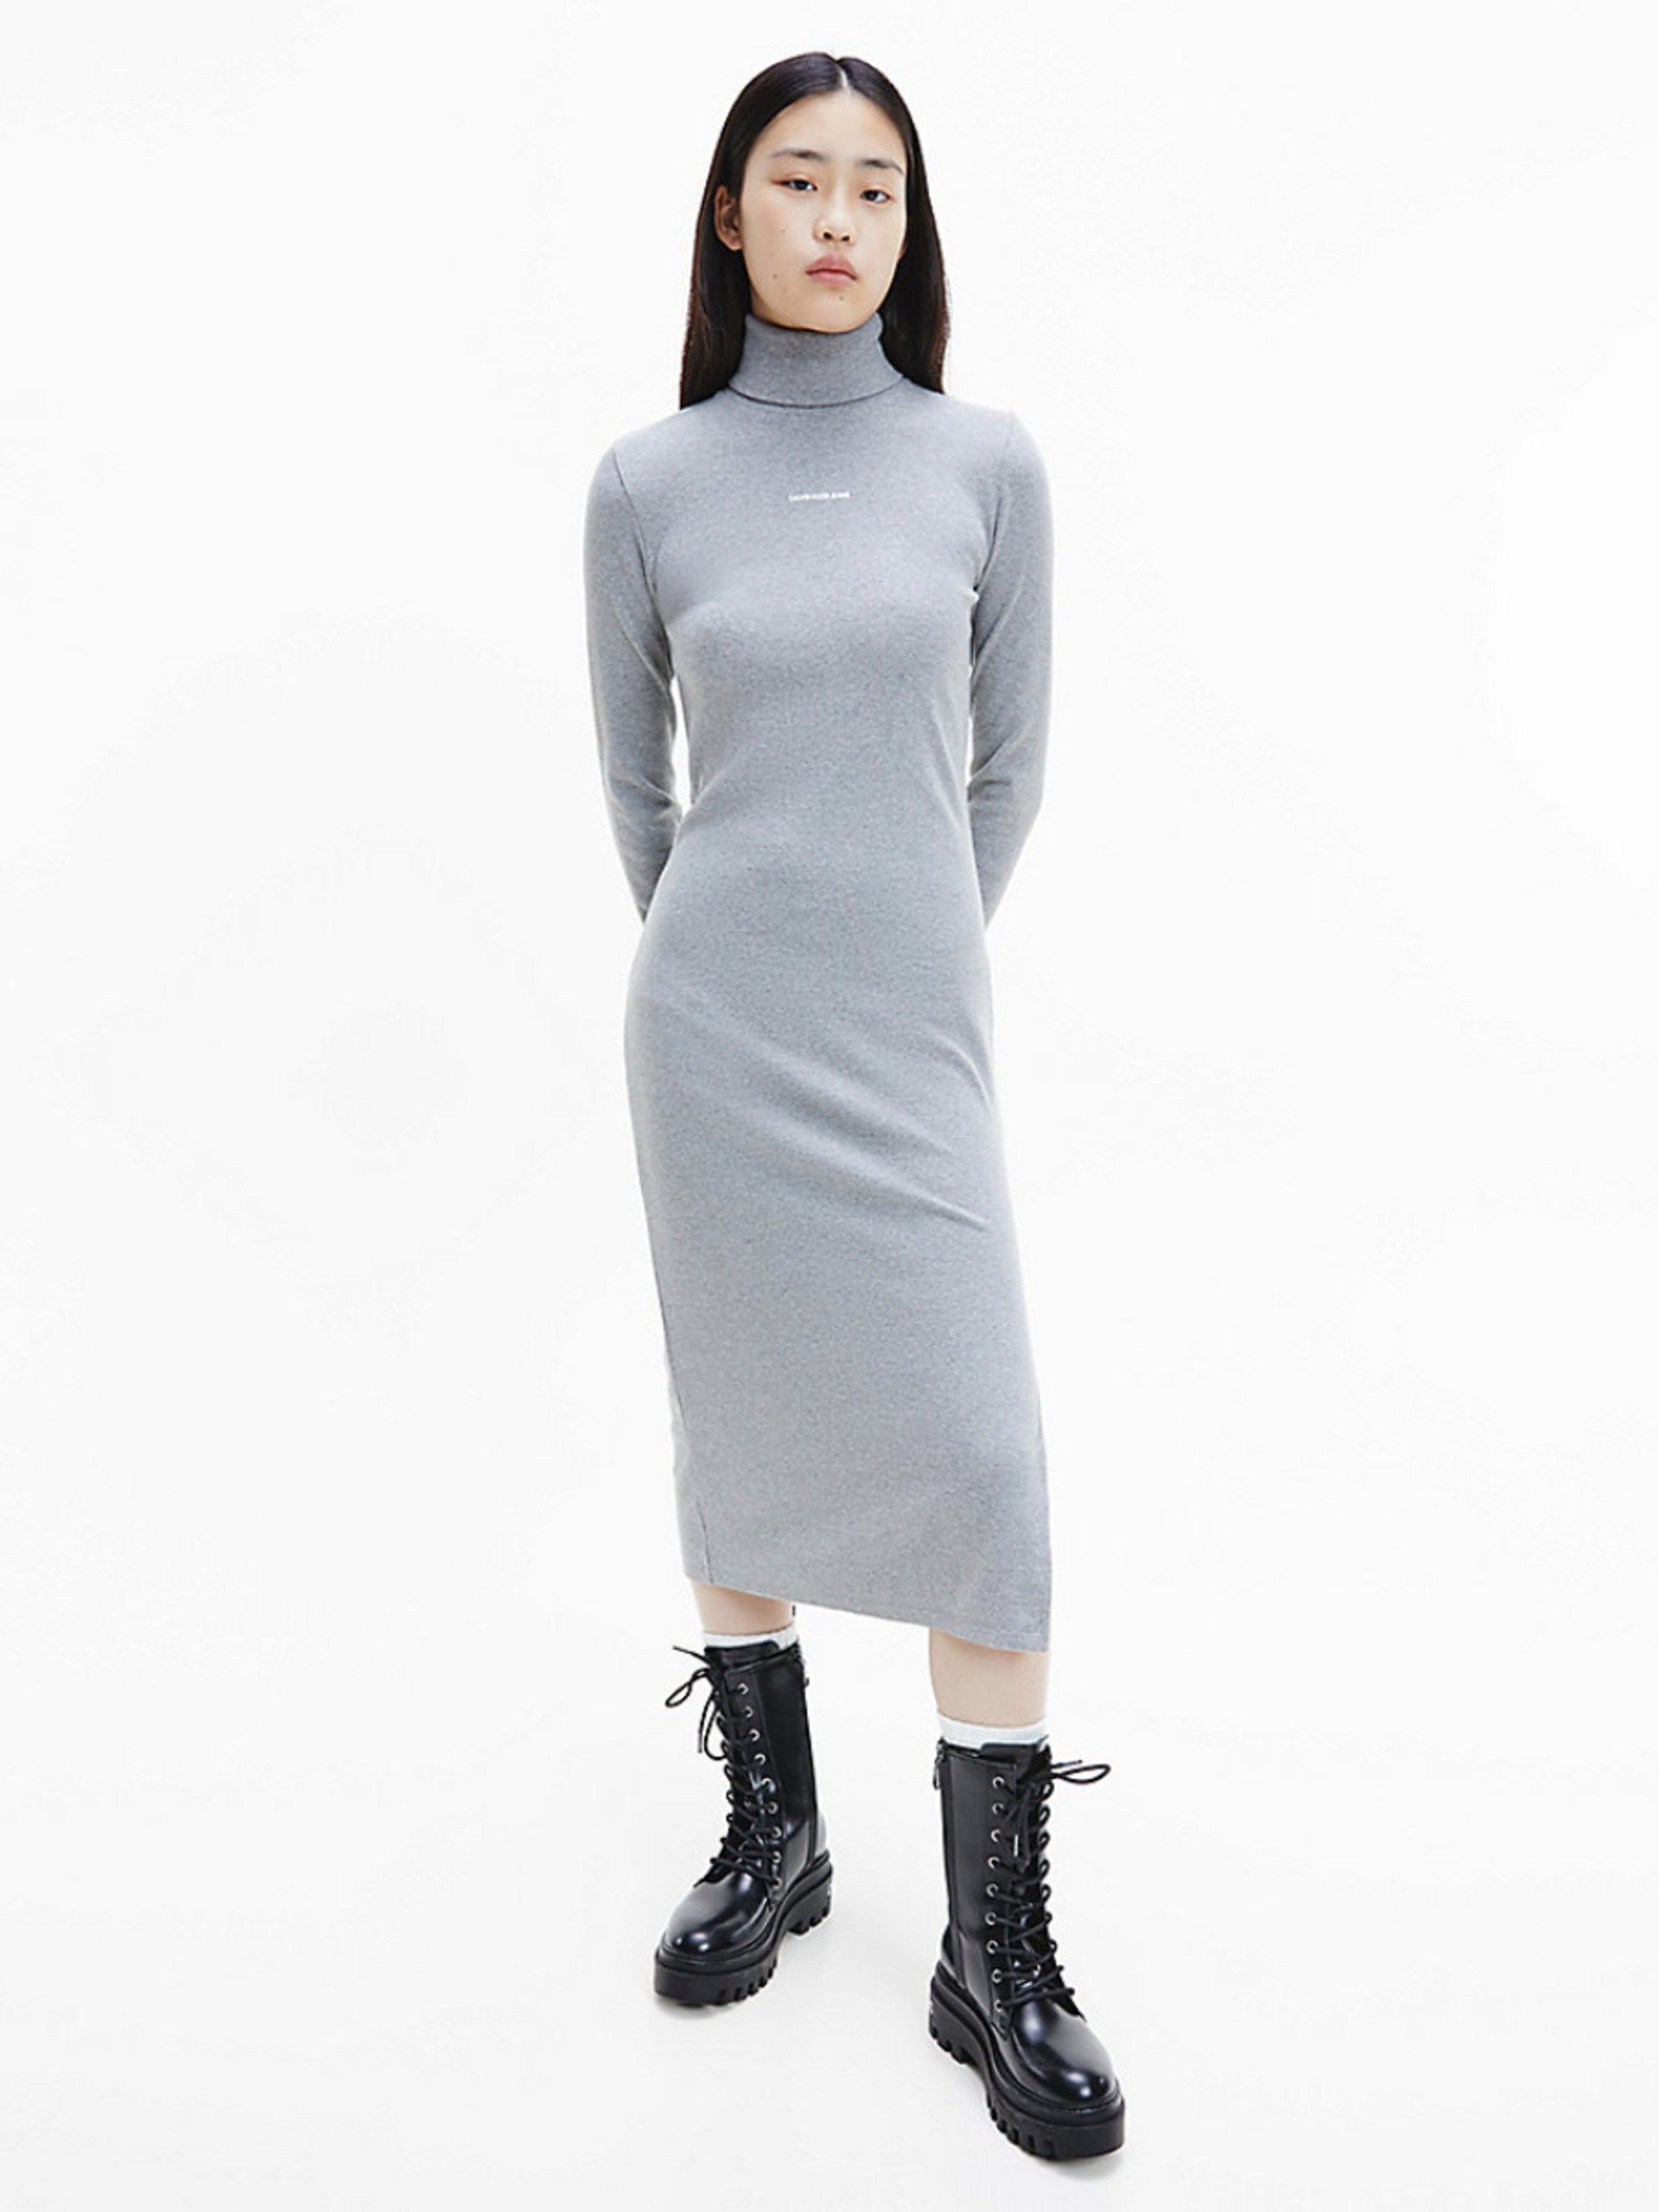 Calvin Klein dámské šedé šaty - S (P3E)